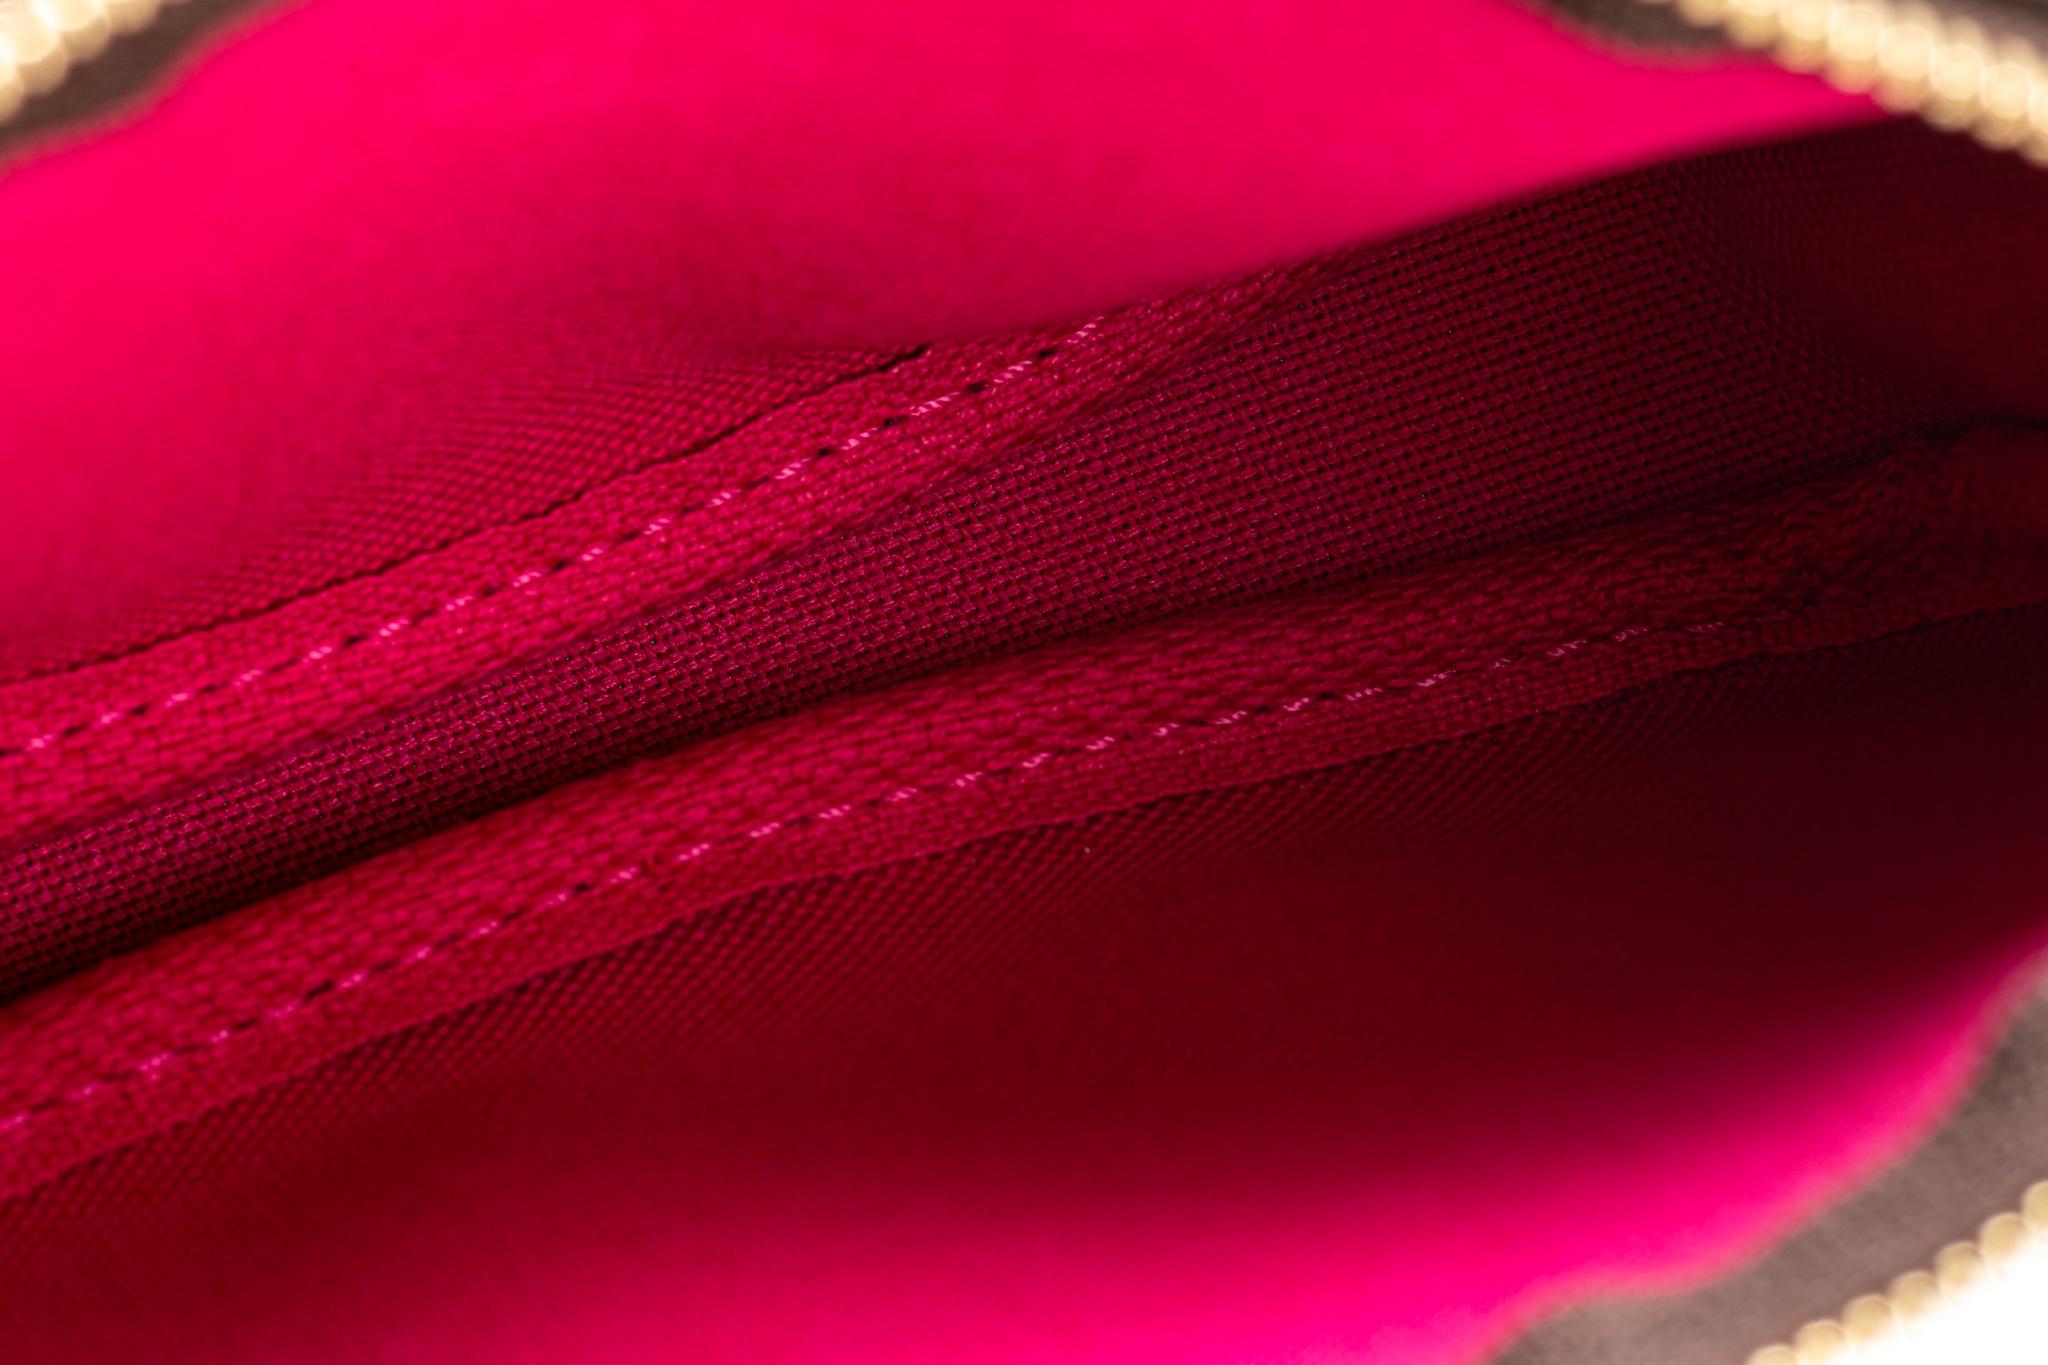 New Louis Vuitton Luna Park Christmas 20 Pochette Bag For Sale at 1stDibs